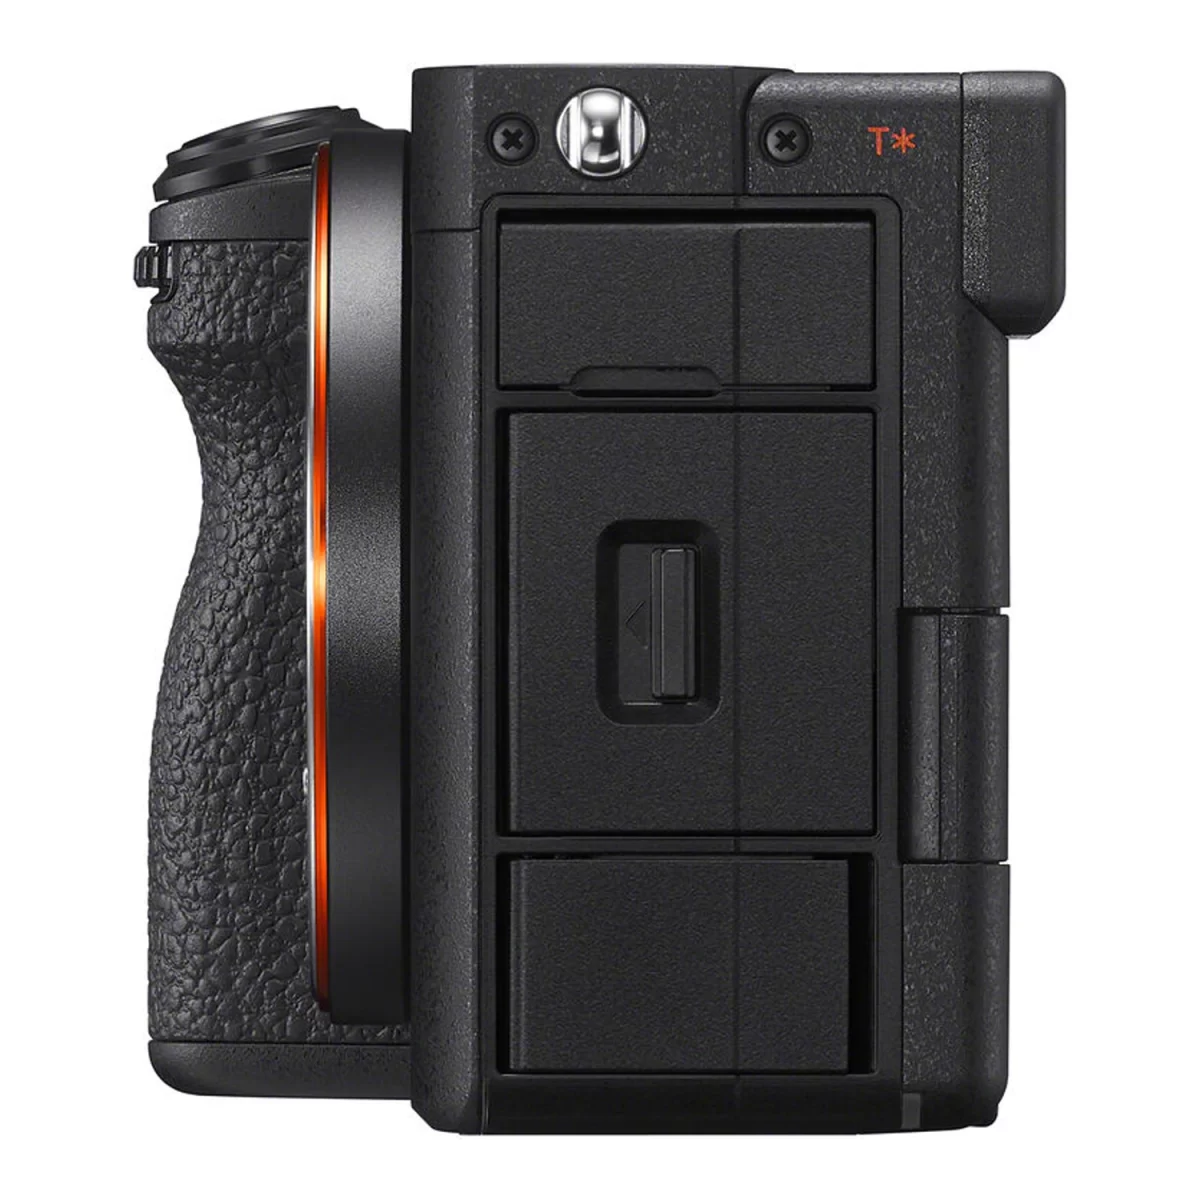 Sony Alpha a7C II mirrorless camera with black body 10 1